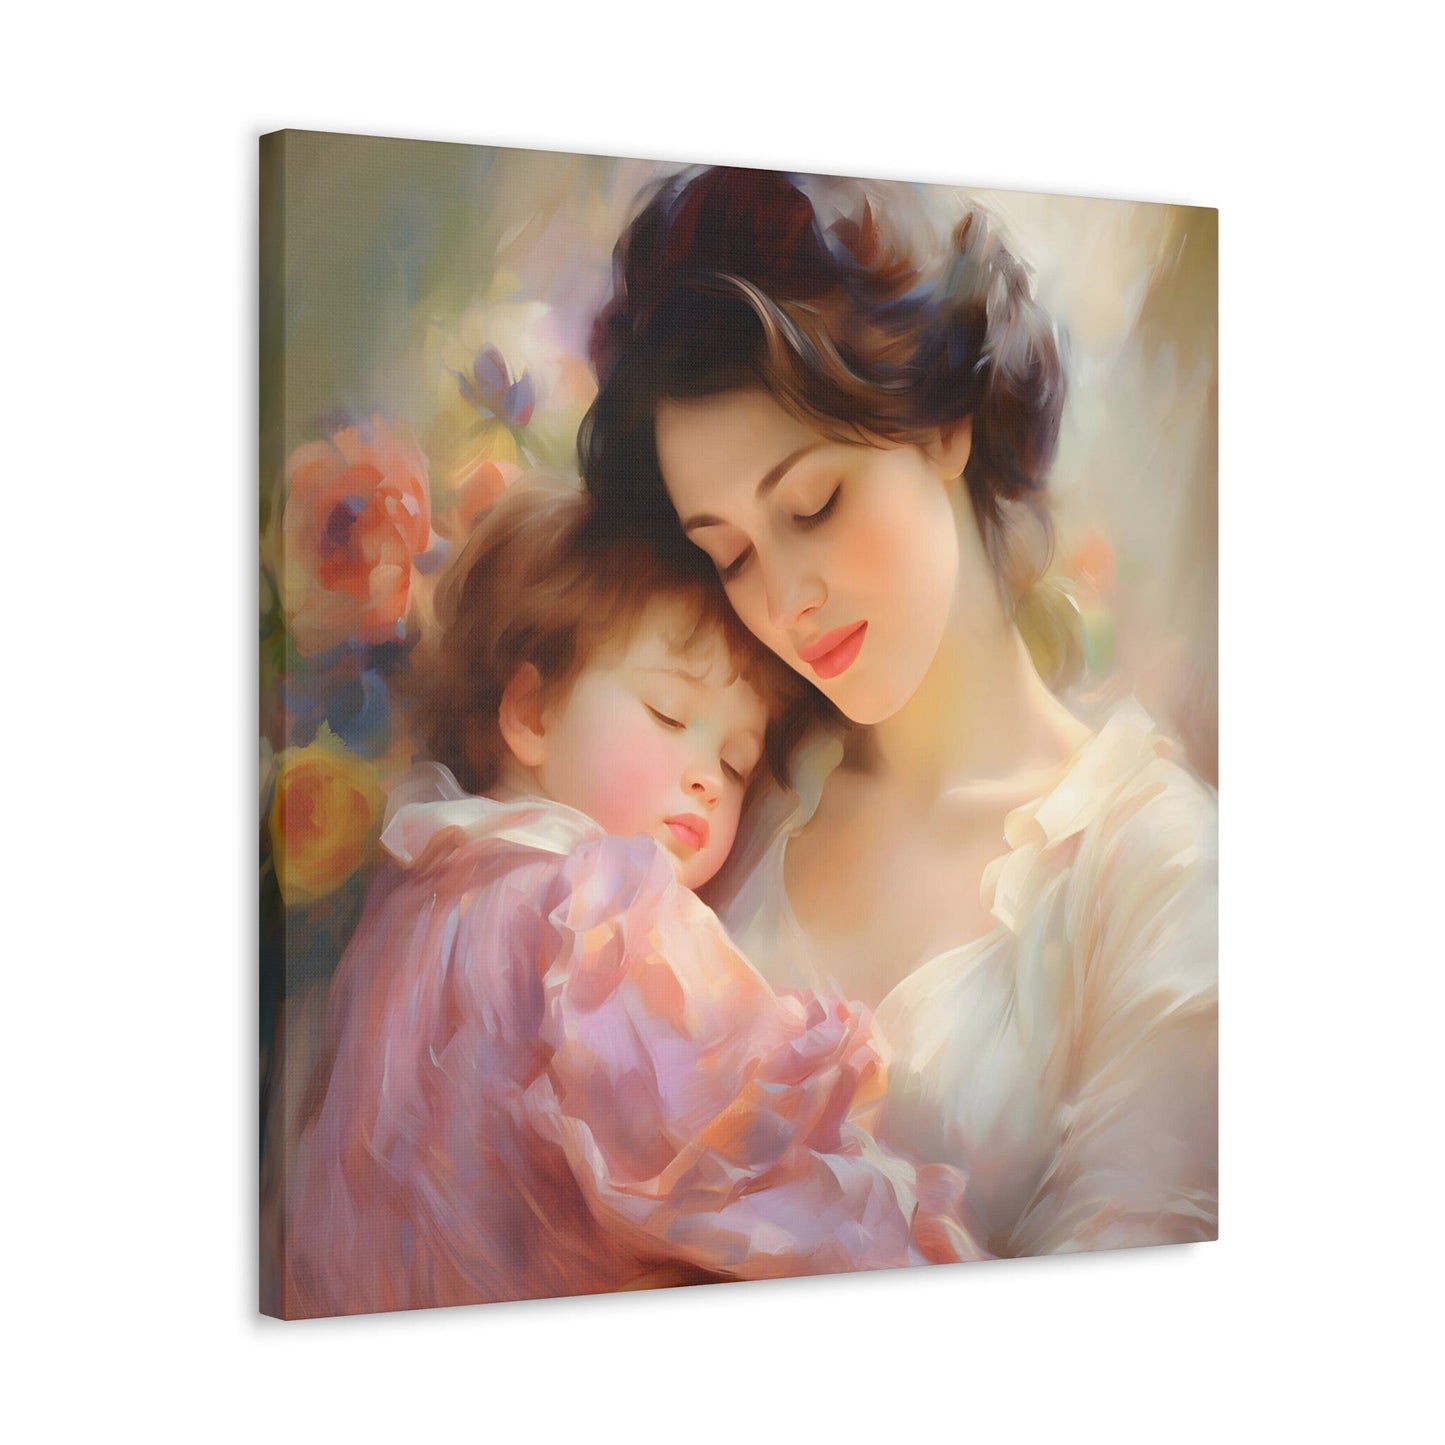 Clara Sutton. Maternal Serenity. Exclusive Canvas Print